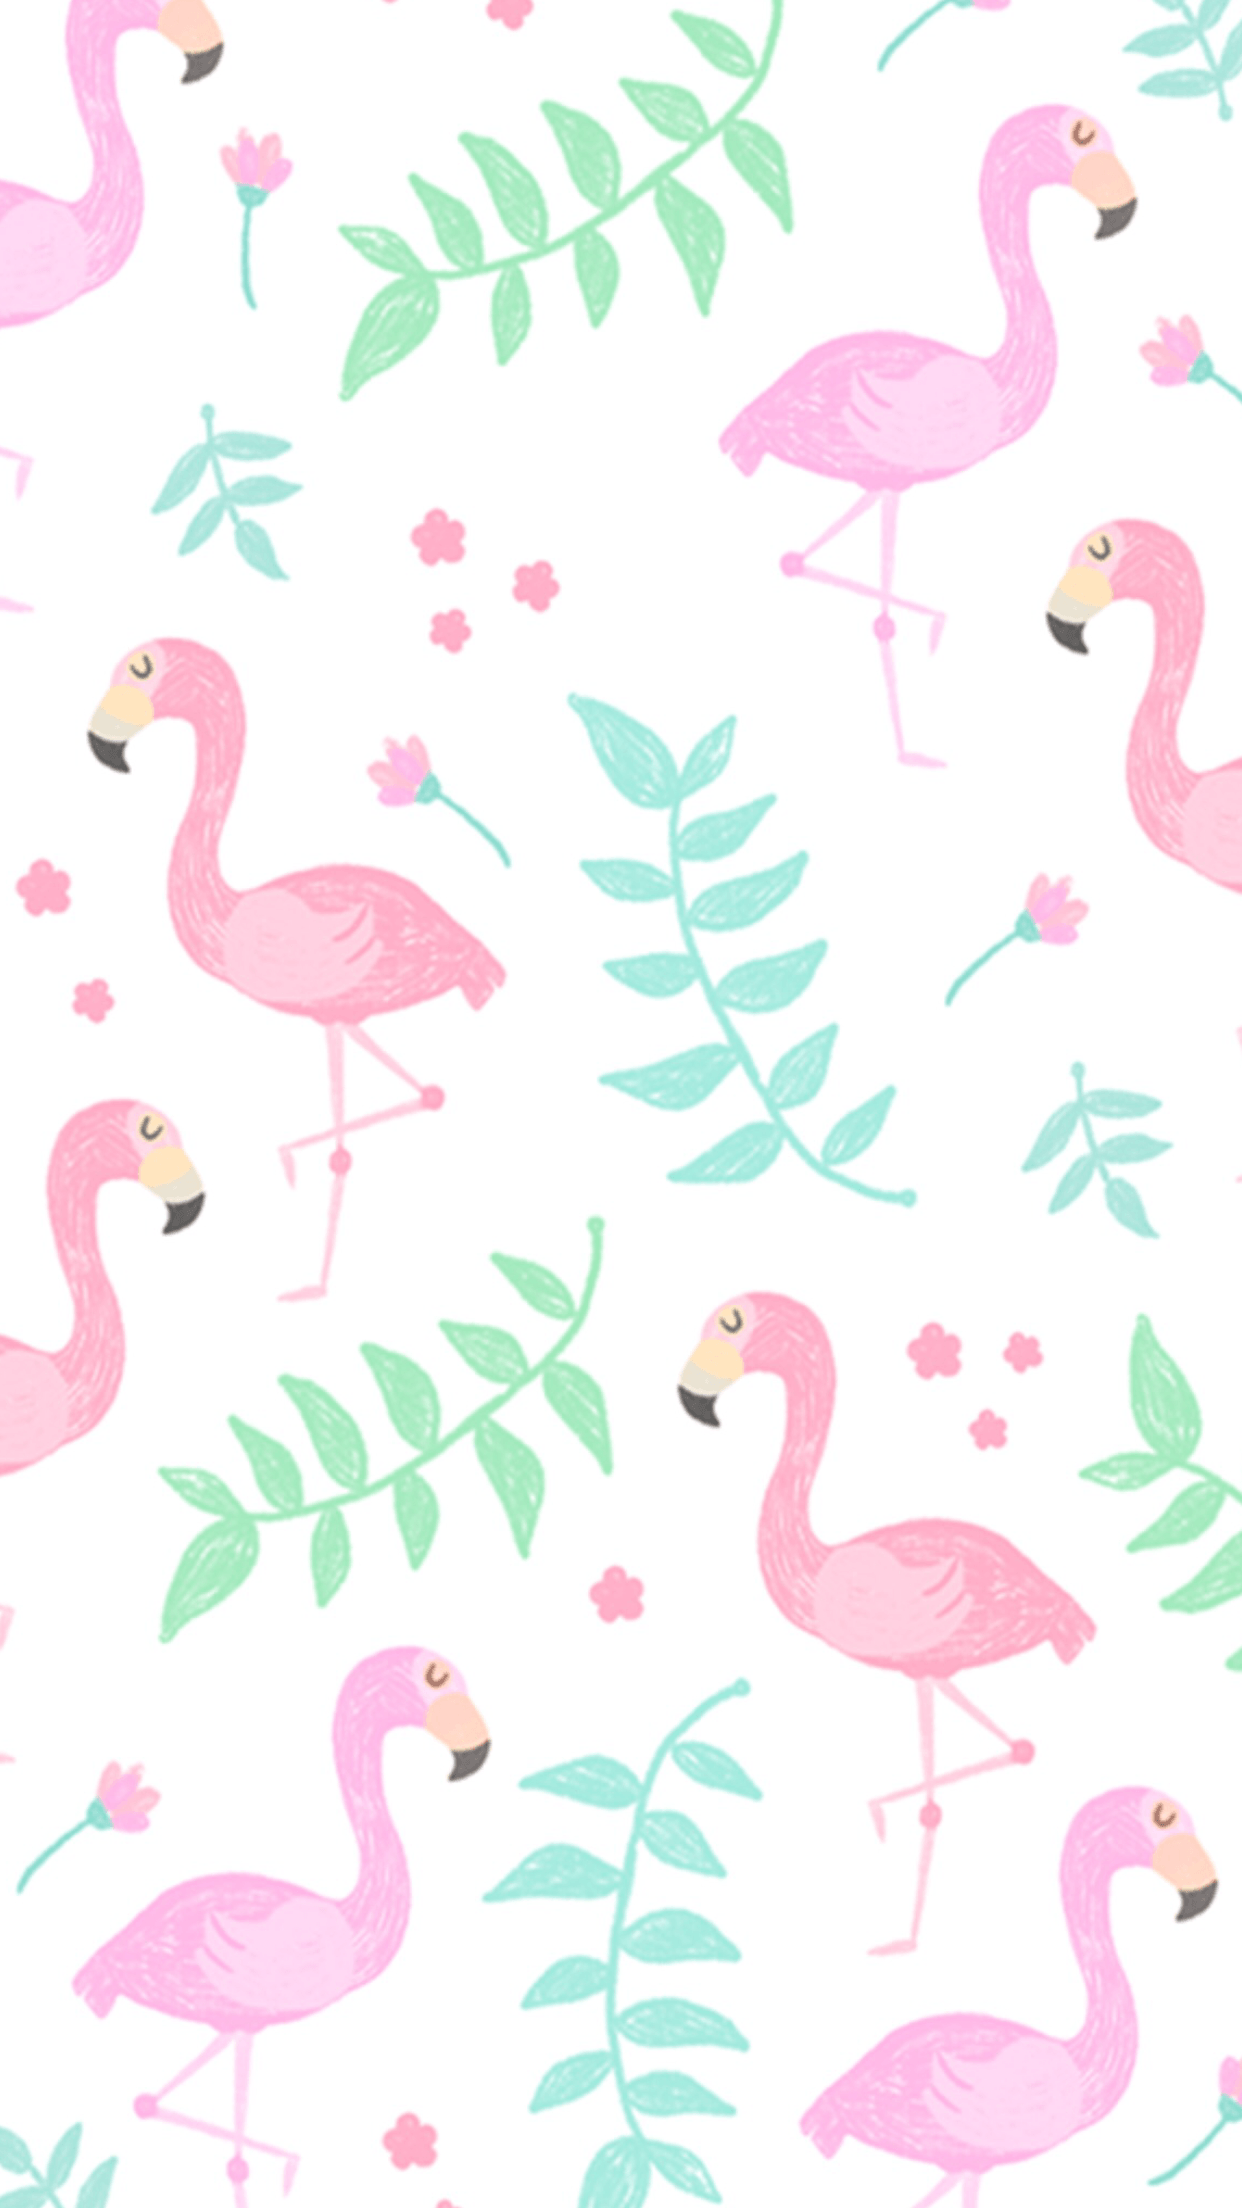 Download Flamingo Flamingos Iphone Wallpaper Desktop Free HQ Image HQ PNG  Image  FreePNGImg